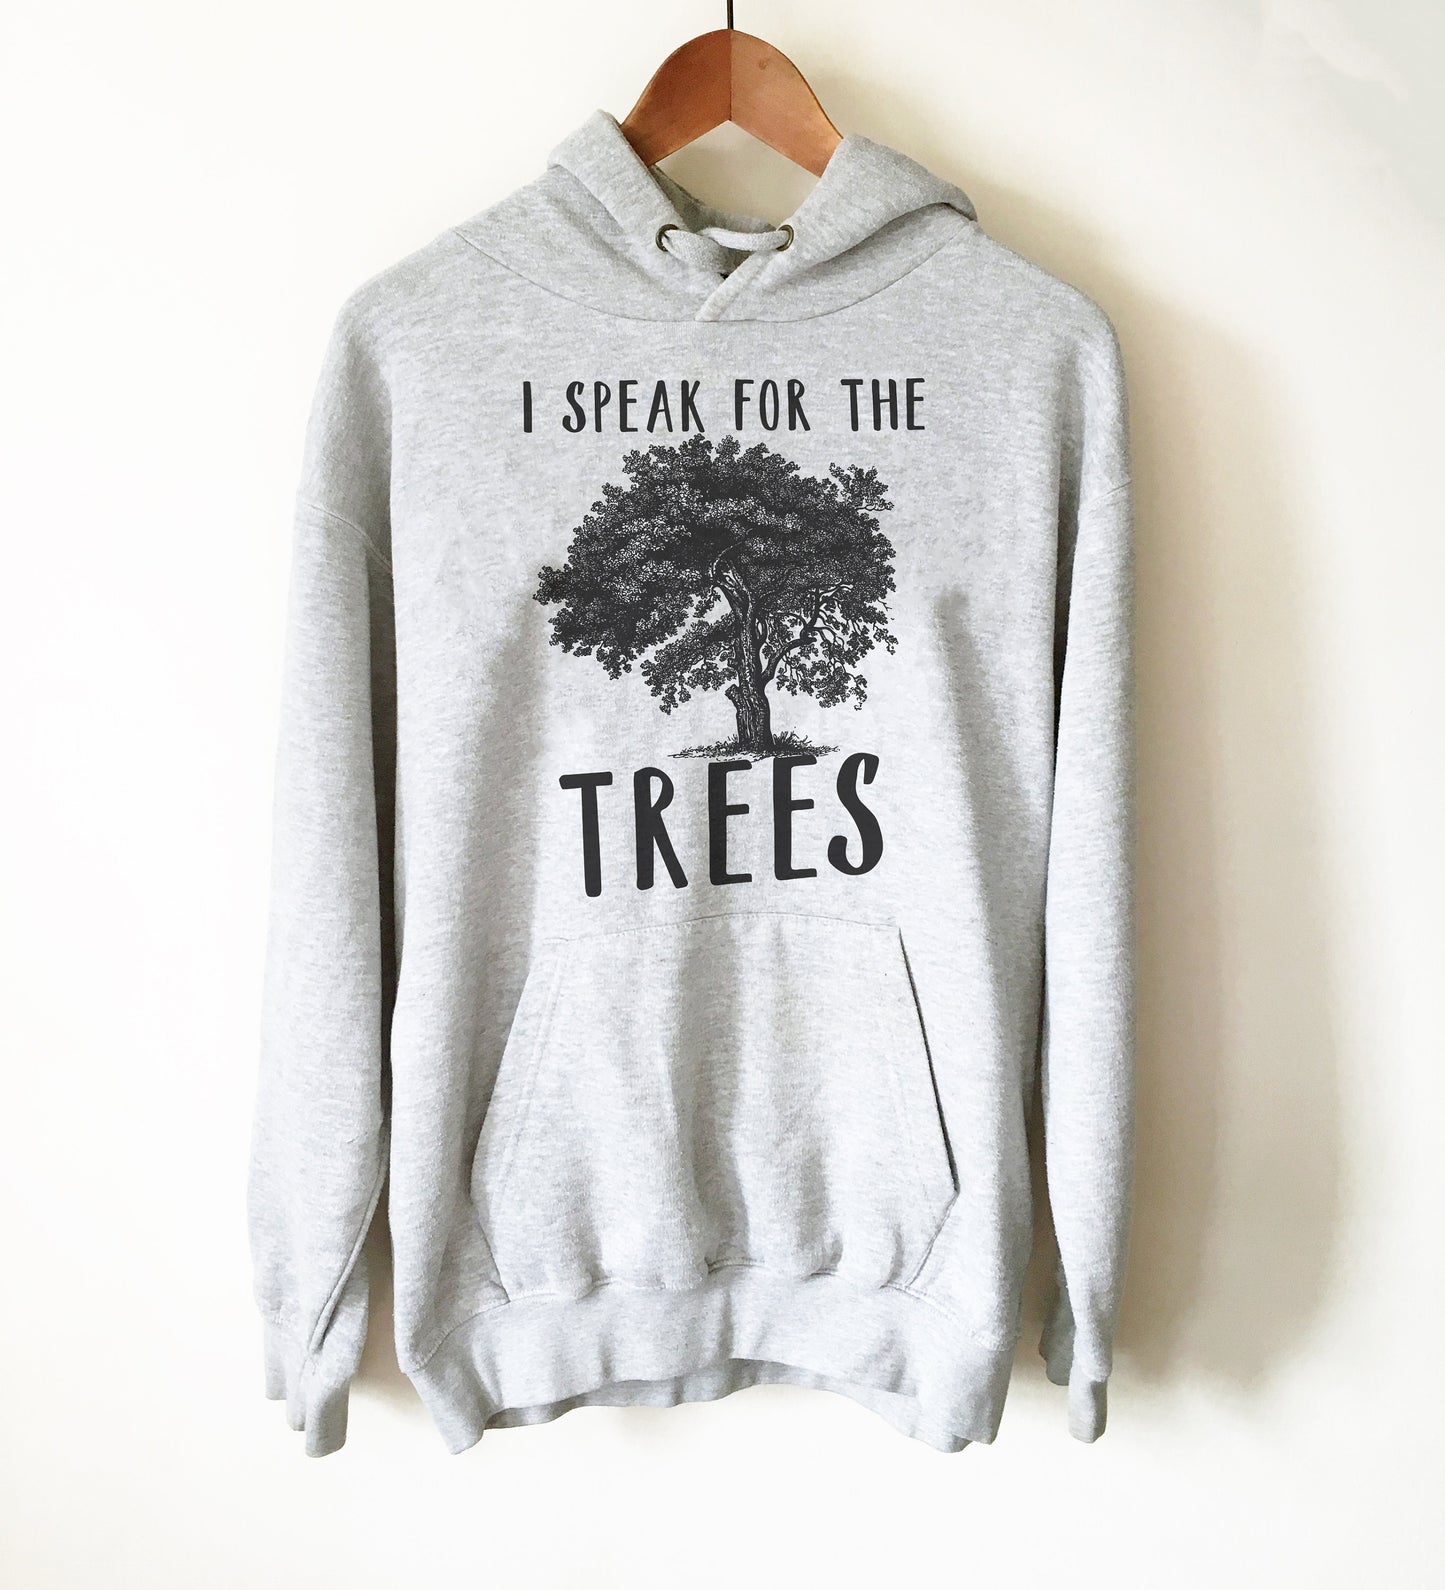 I Speak For The Trees Hoodie - Earth Day Shirt, Environmental TShirt, Nature Shirt, Climate Change Shirt, Tree Hugger, Save The Planet